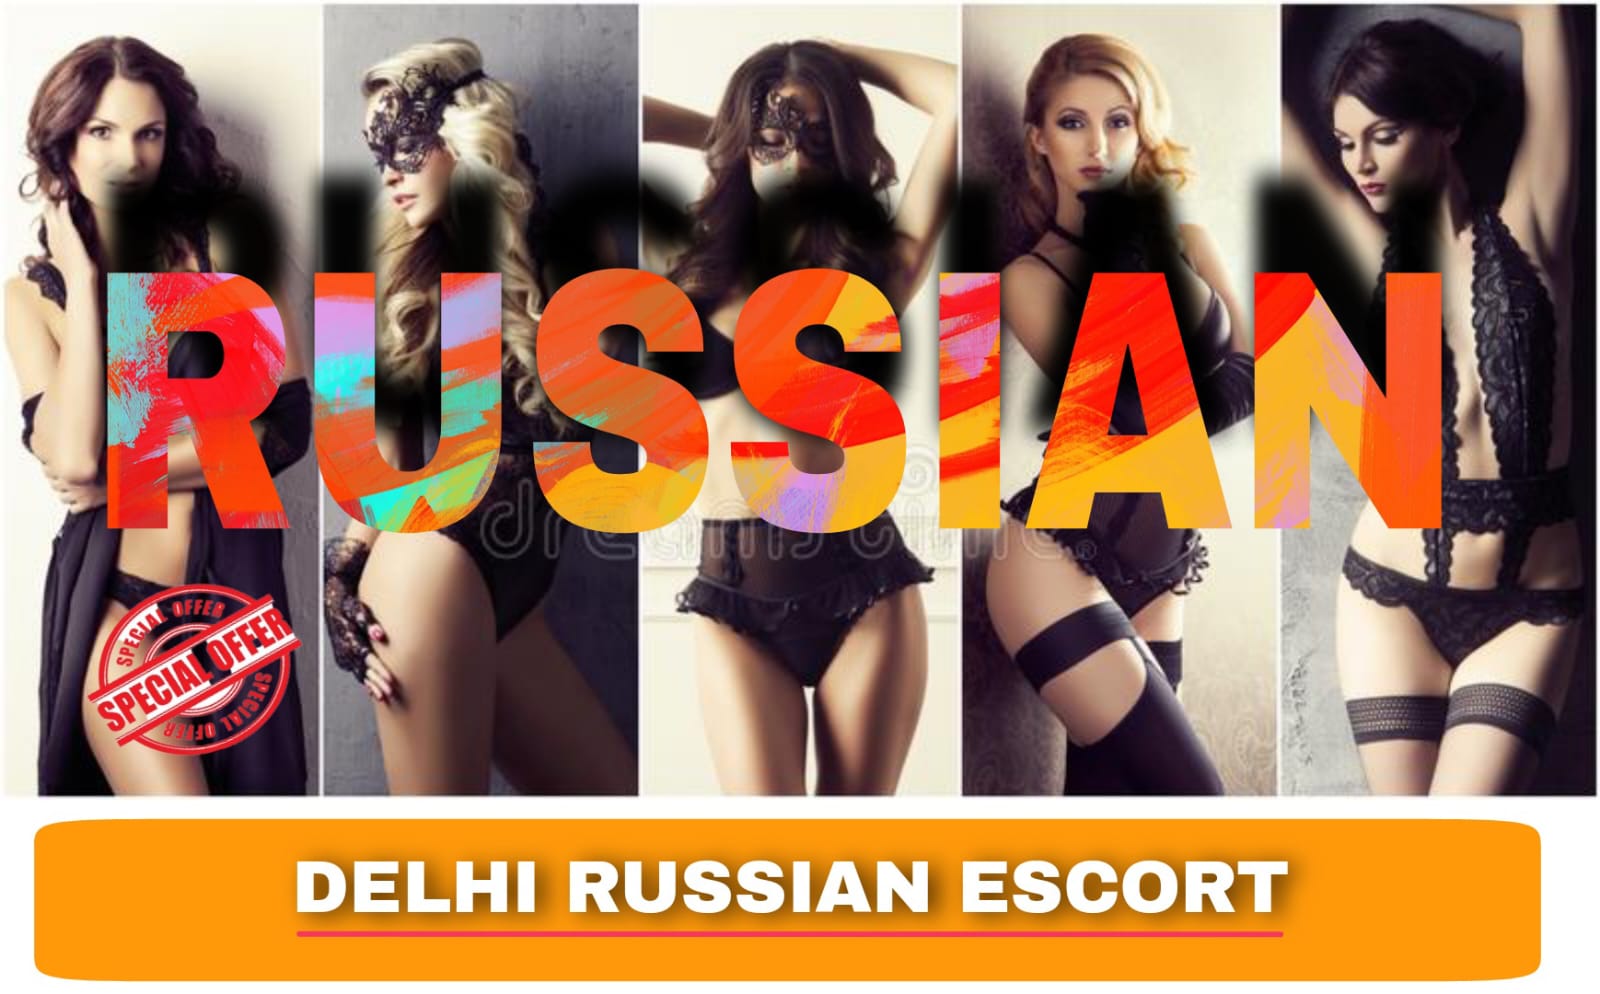 sexy model russian escort in delhi by jareena